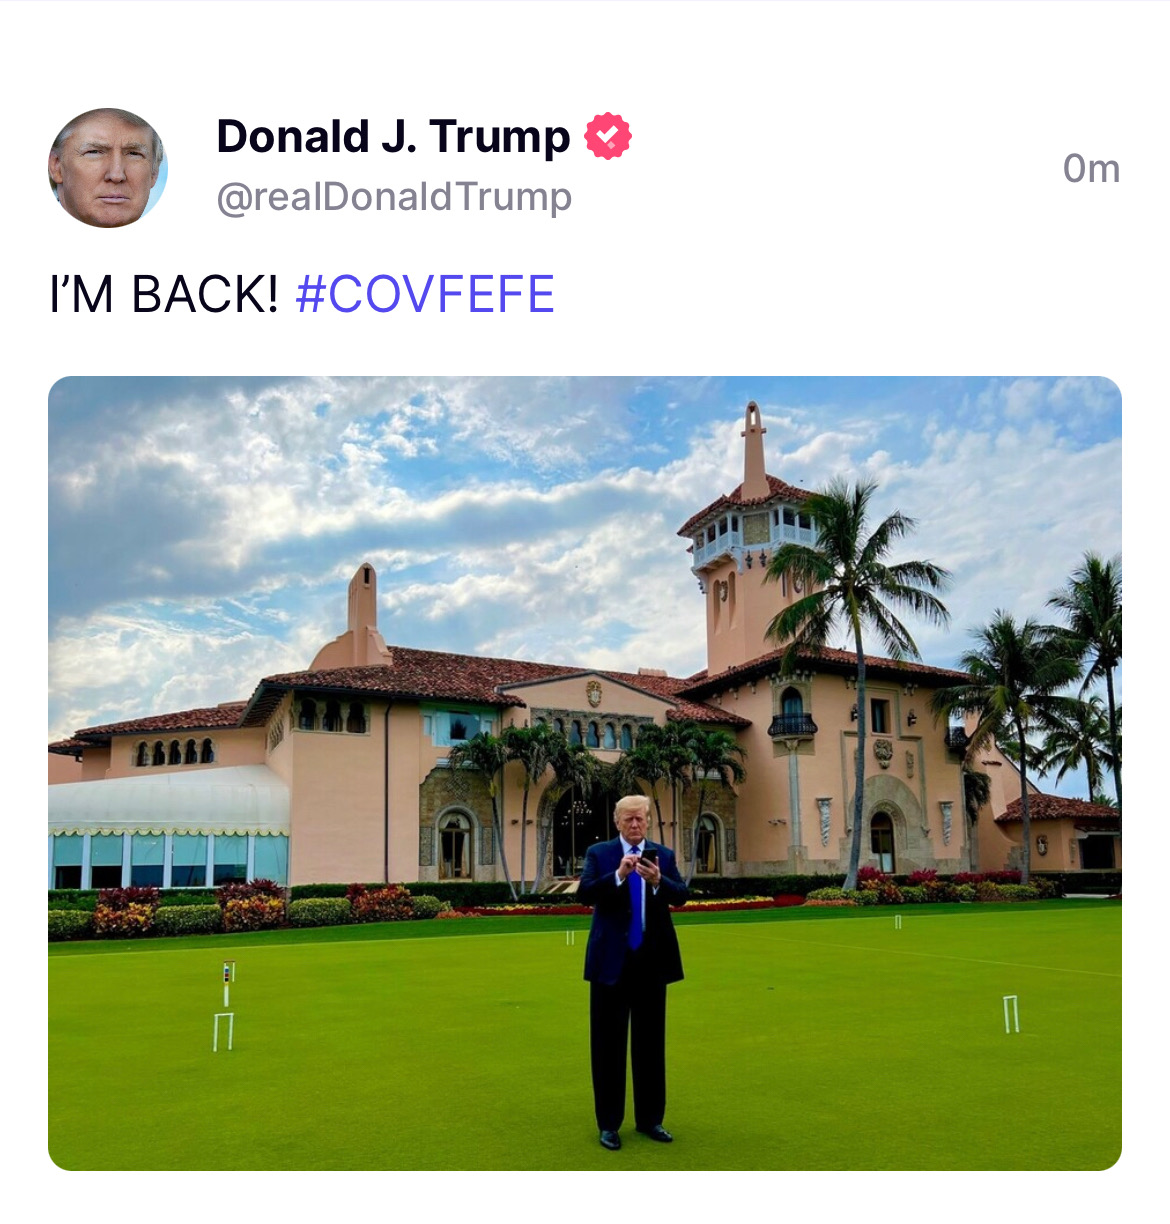 Trump joins TRUTH Social: 'I'M BACK! #COVFEFE'